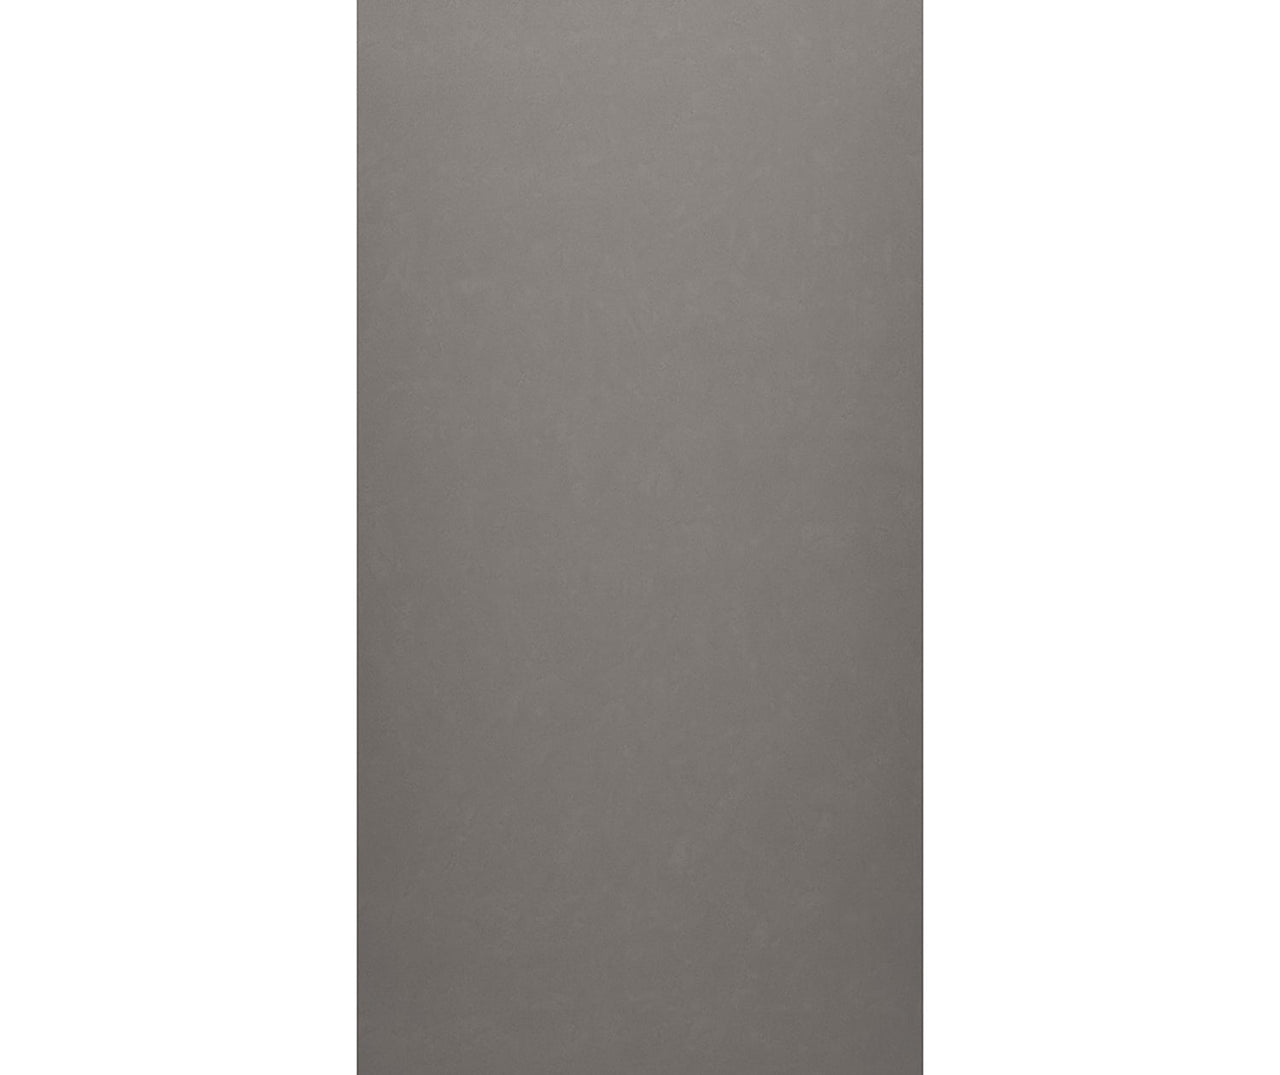 SMMK-7250-1 50 x 72 Swanstone Smooth Tile Glue up Bathtub and Shower Single Wall Panel  - BNGBath